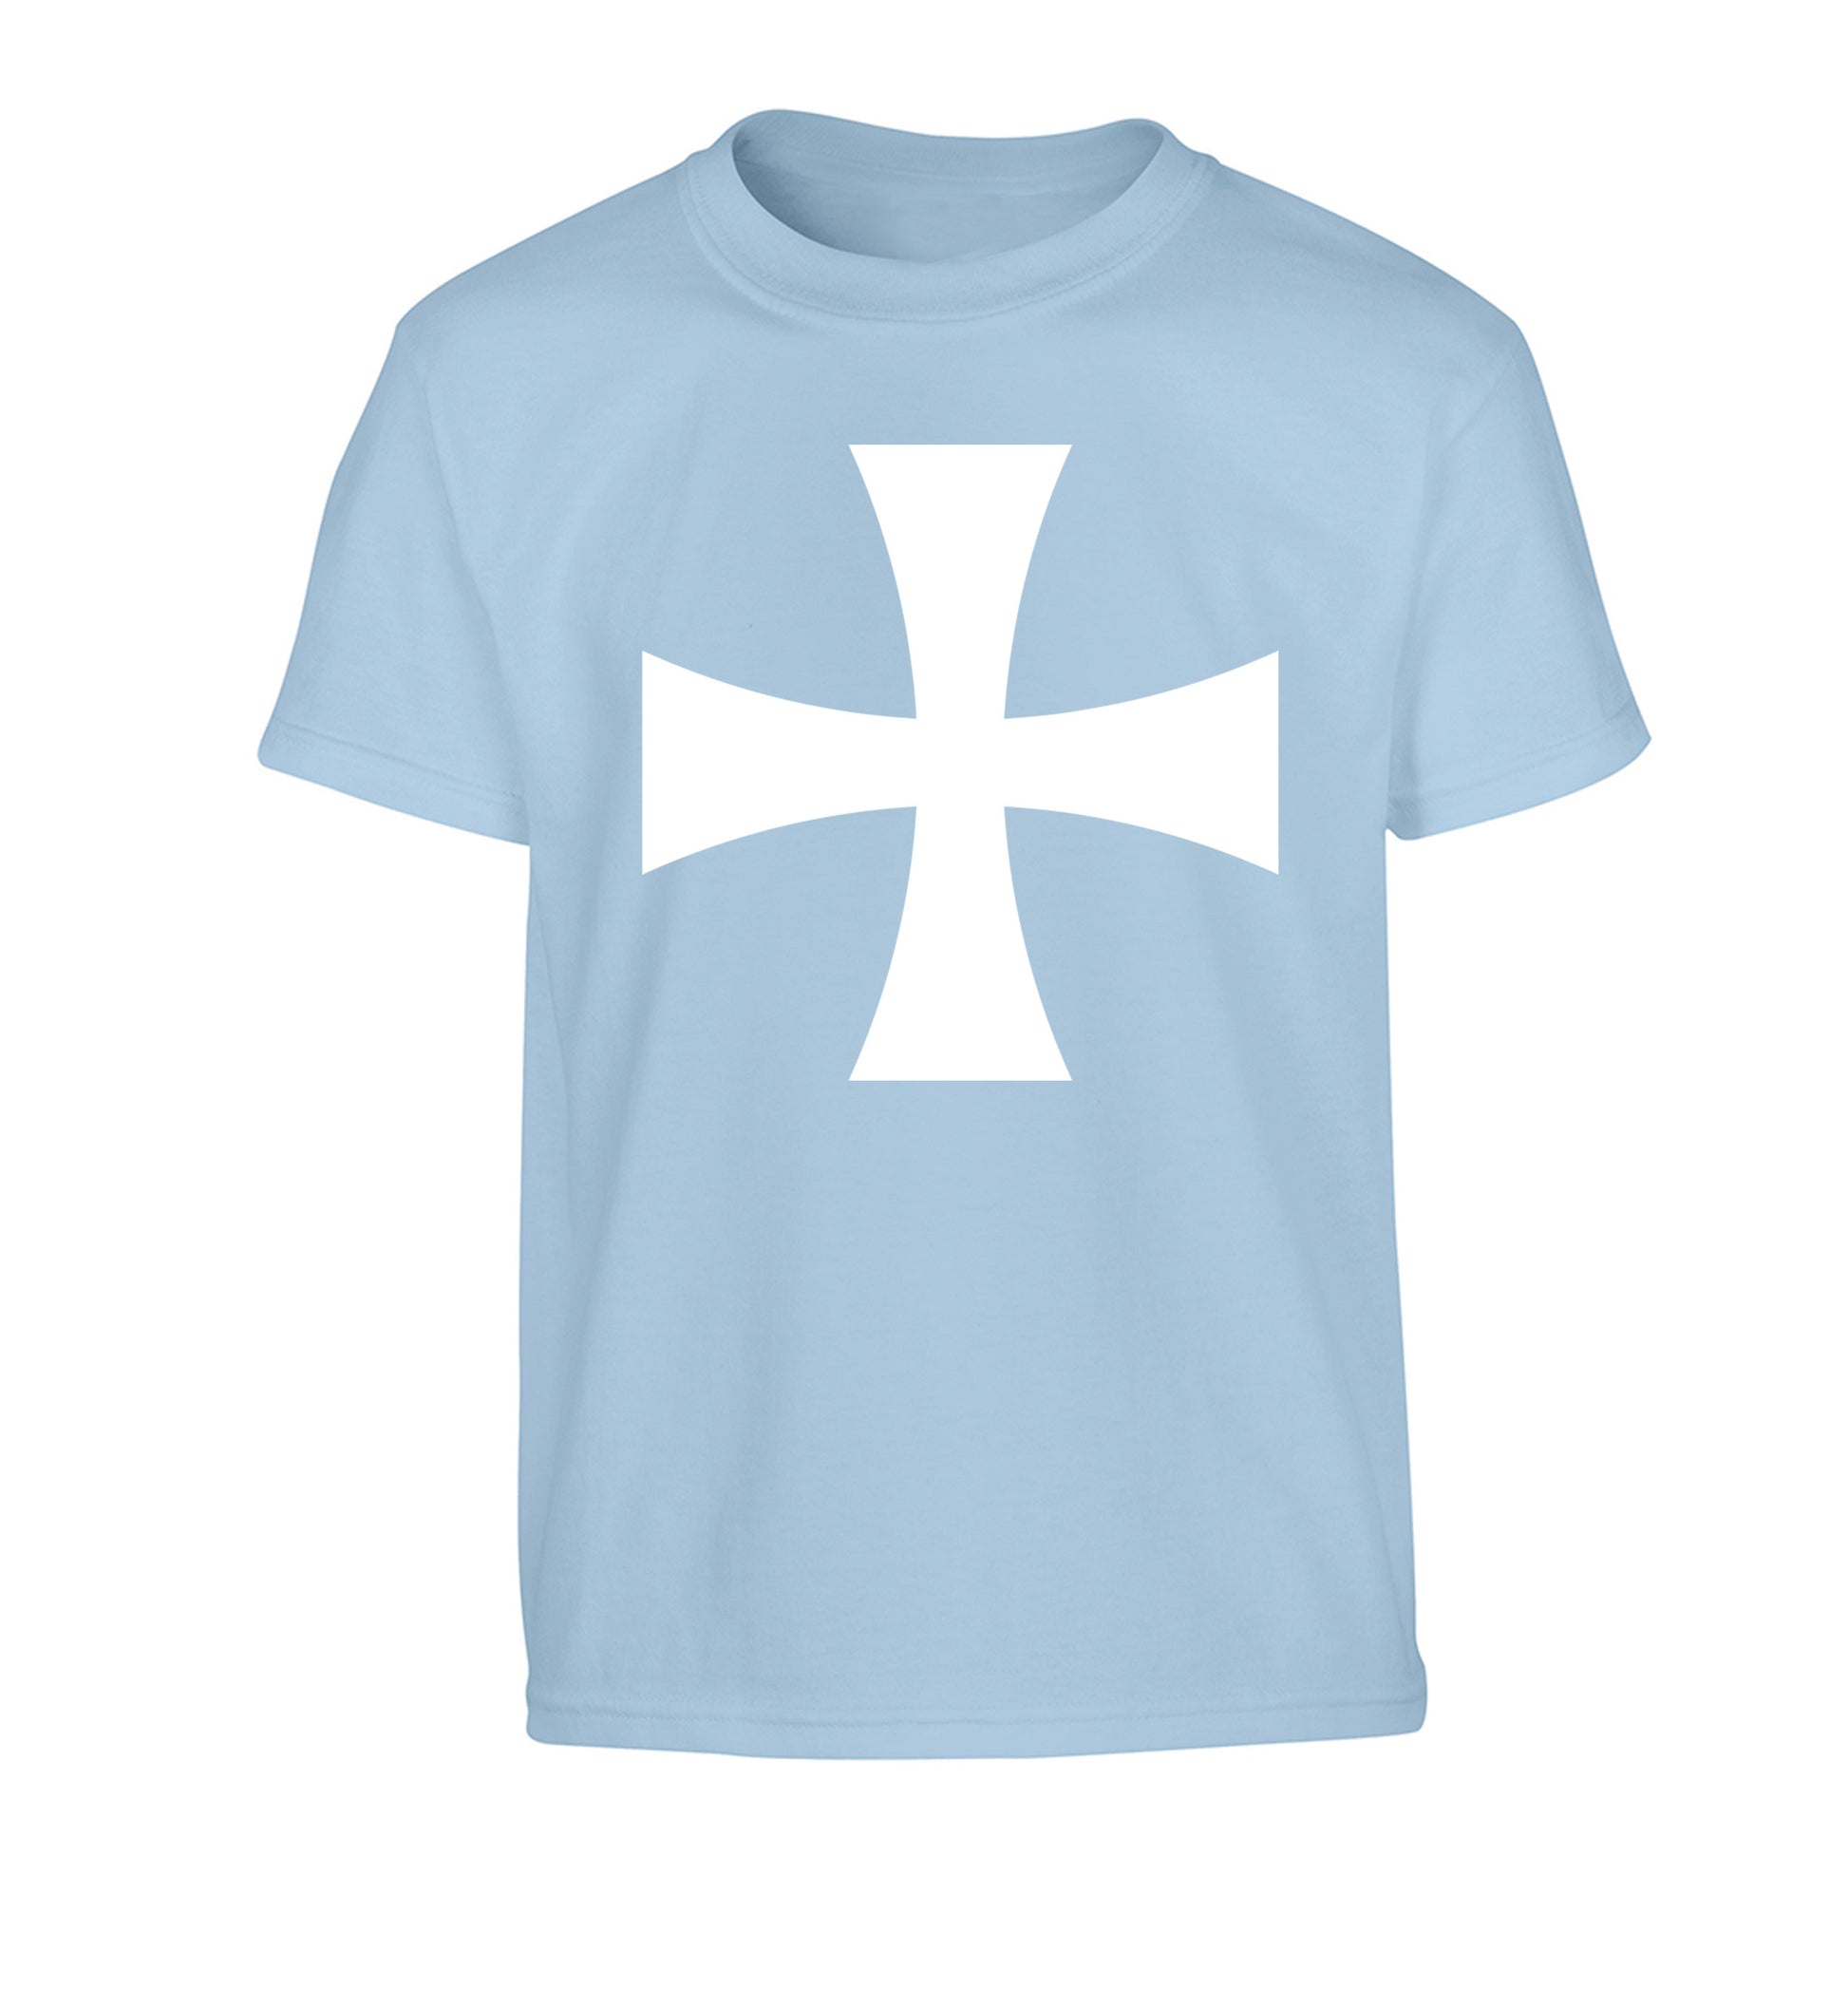 Knights Templar cross Children's light blue Tshirt 12-14 Years